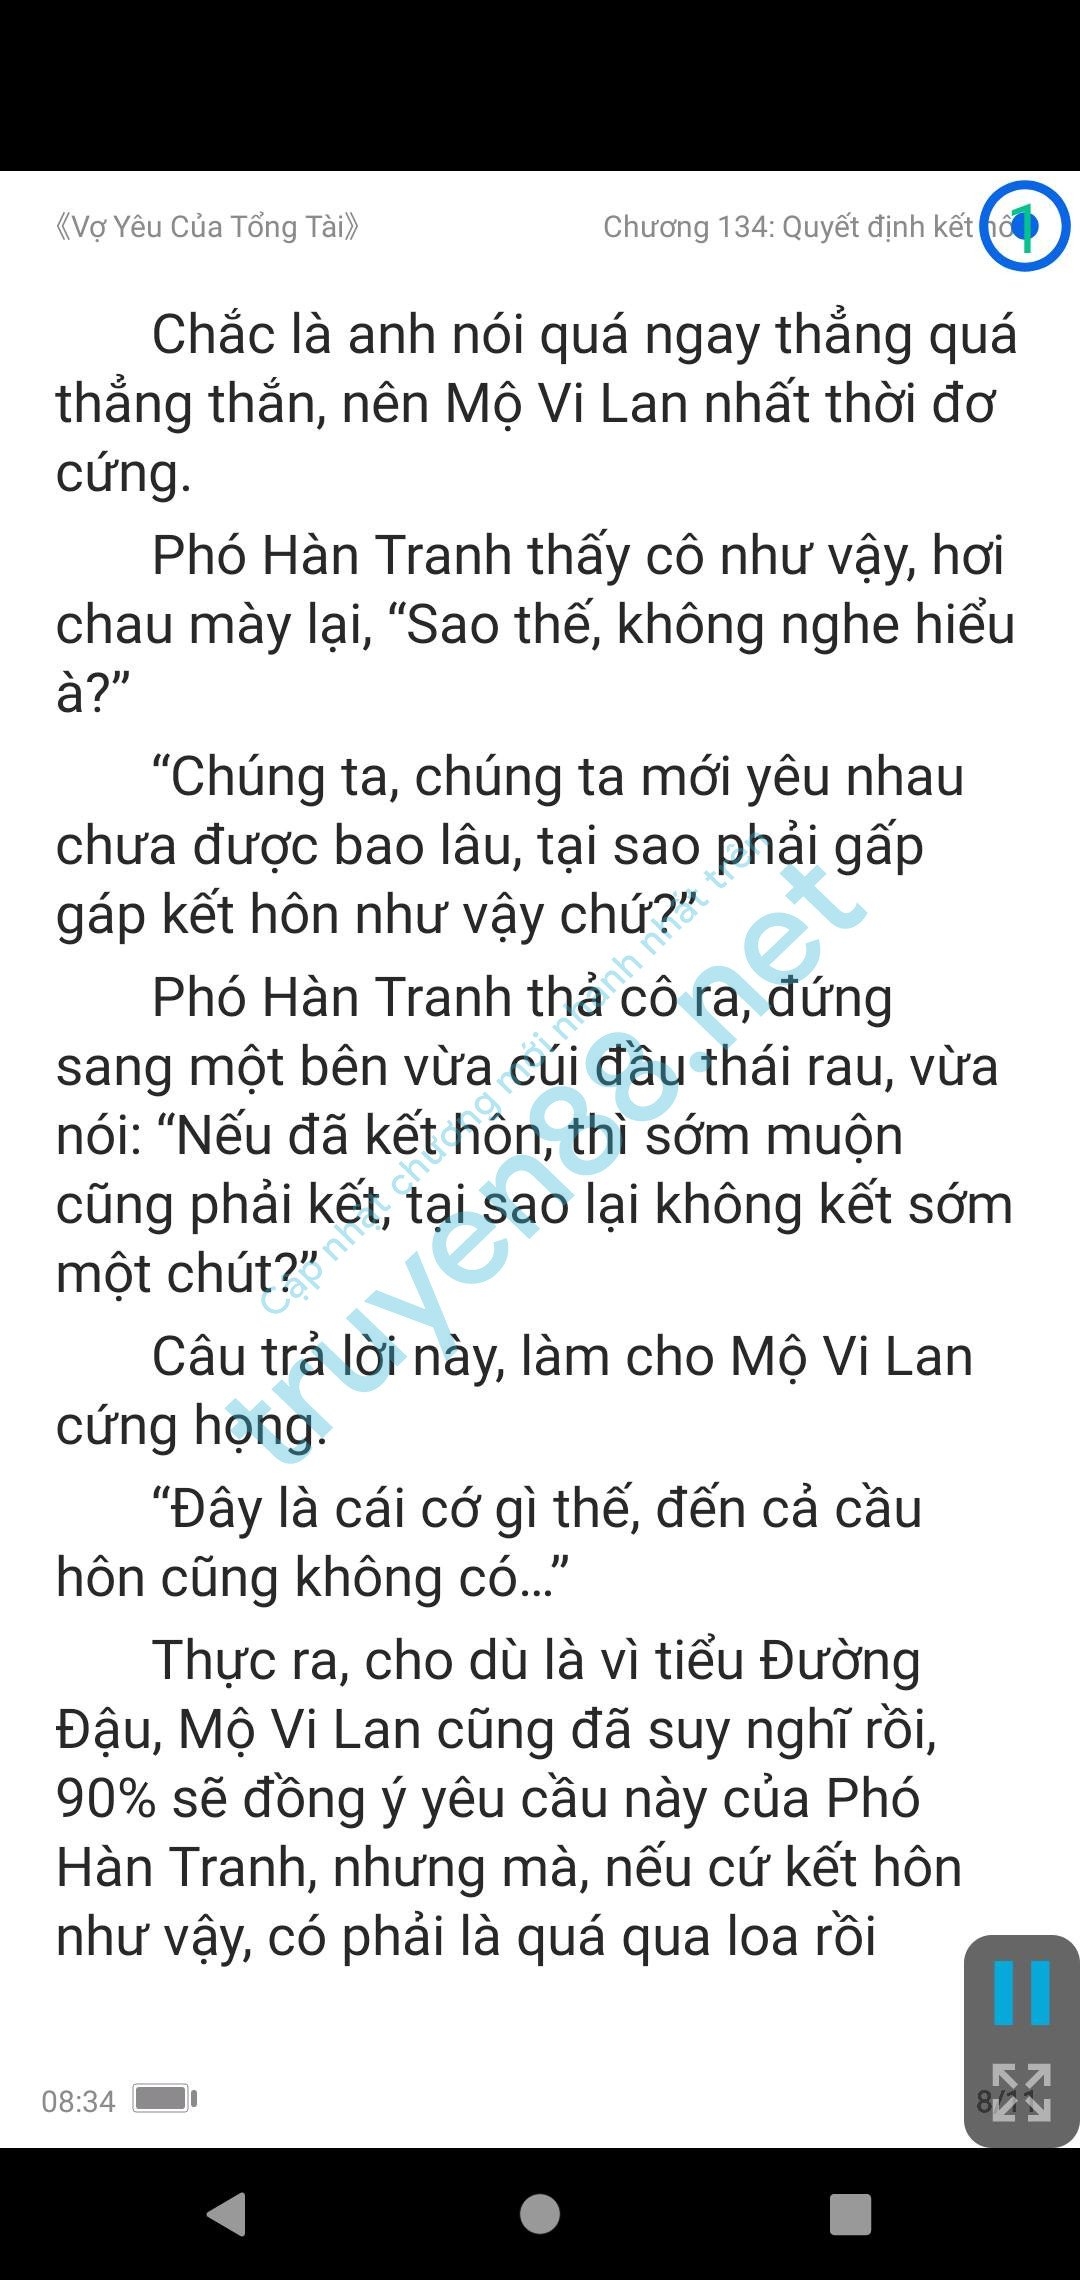 vo-yeu-cua-tong-tai-mo-vi-lan--pho-han-tranh-134-0